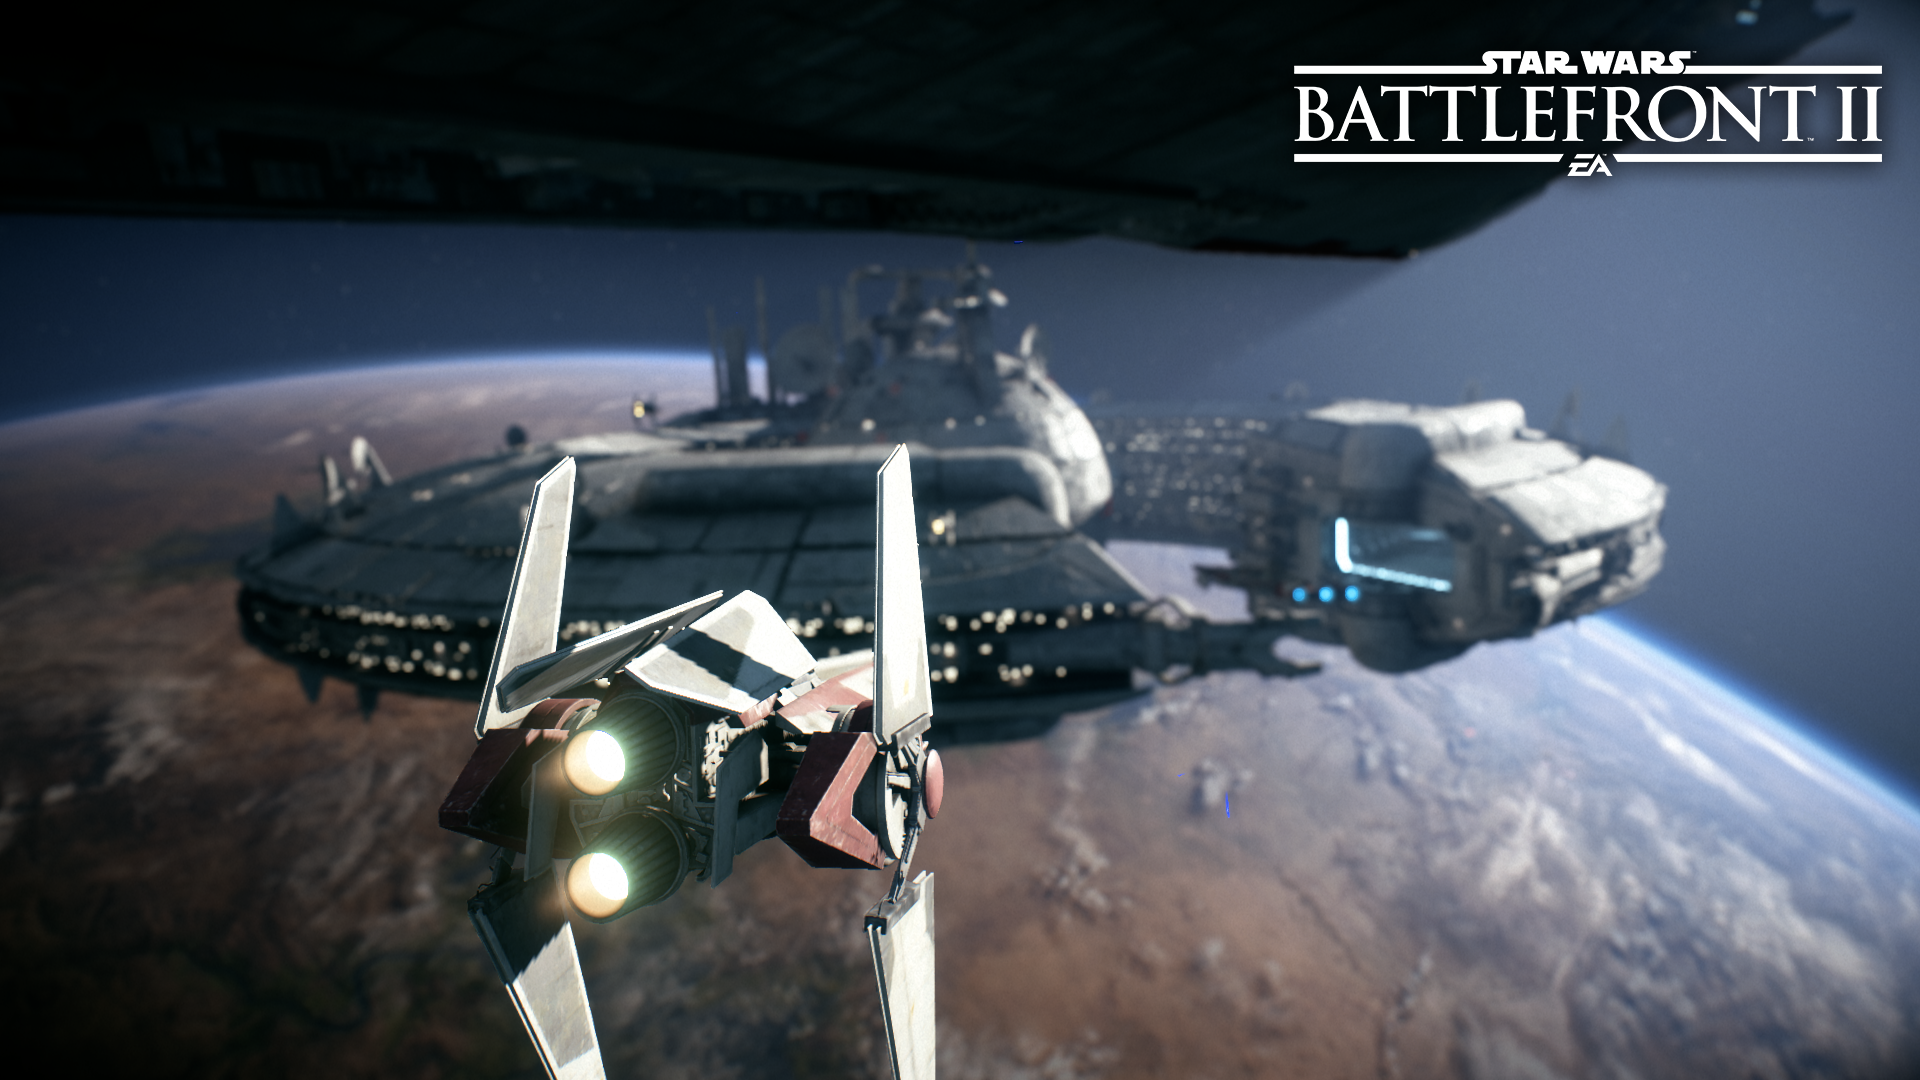 Battle of Ryloth start screen at Star Wars: Battlefront II (2017) Nexus and community